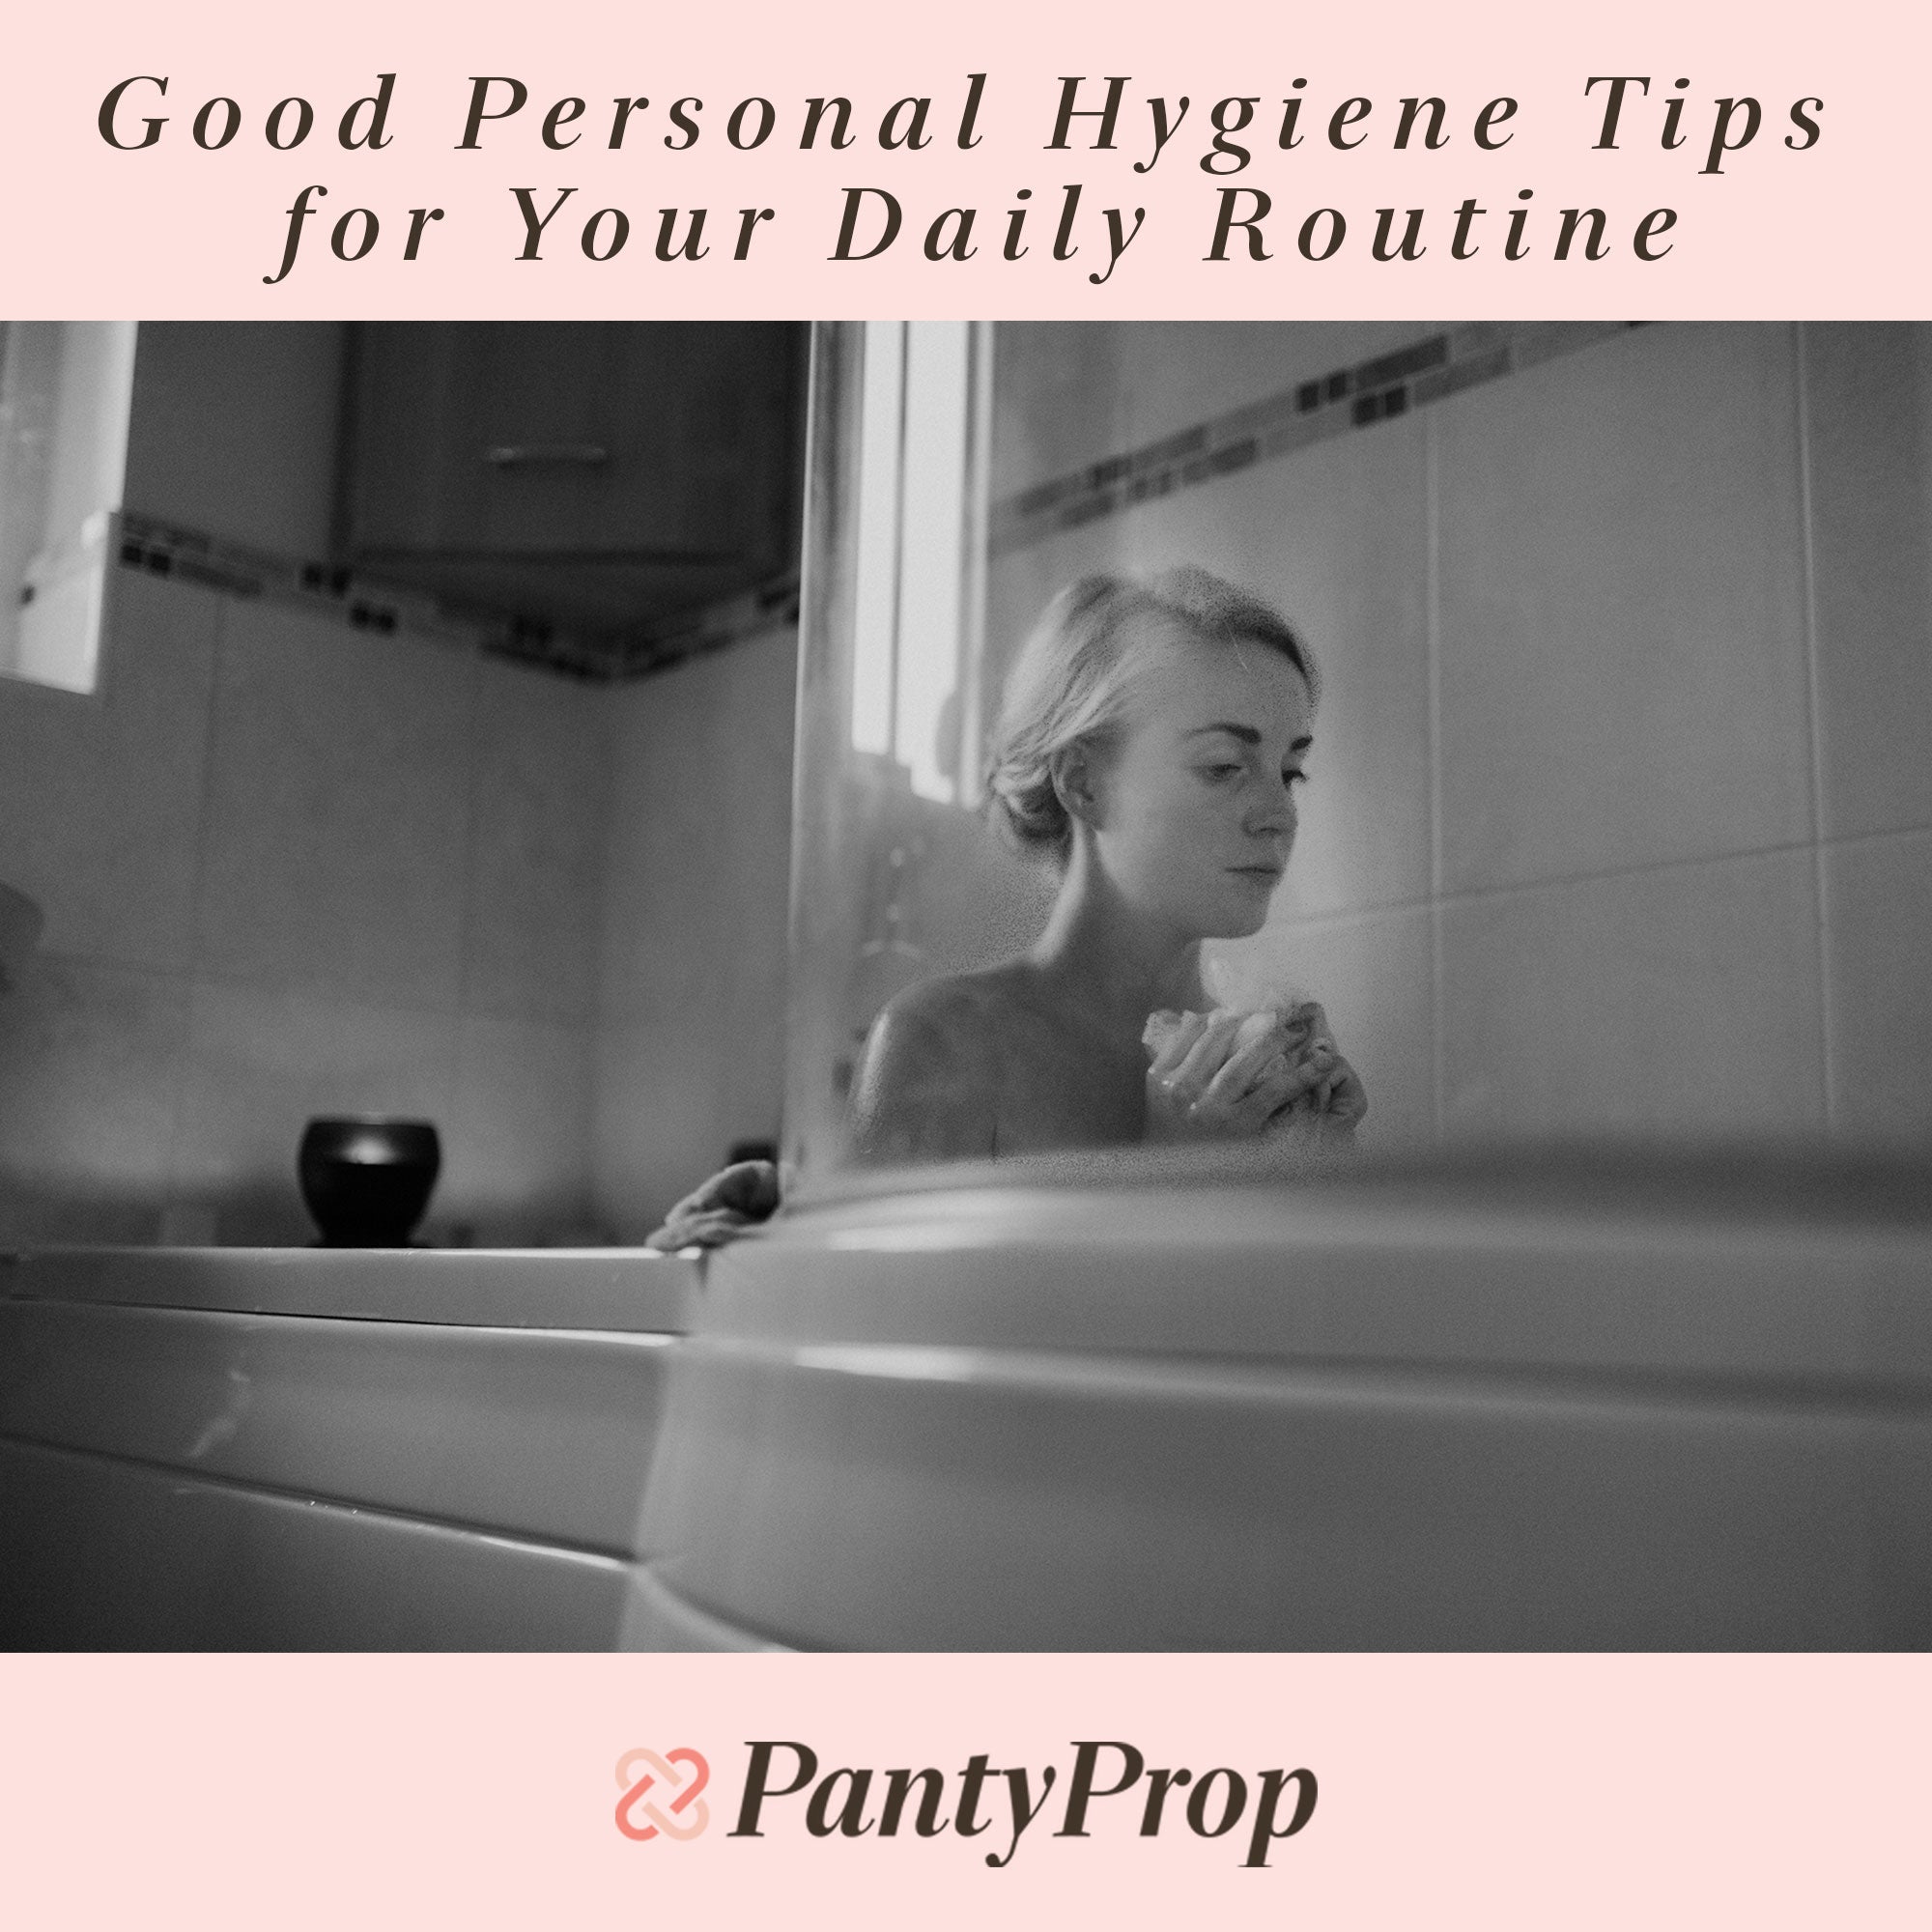 Simple everyday hygiene tips